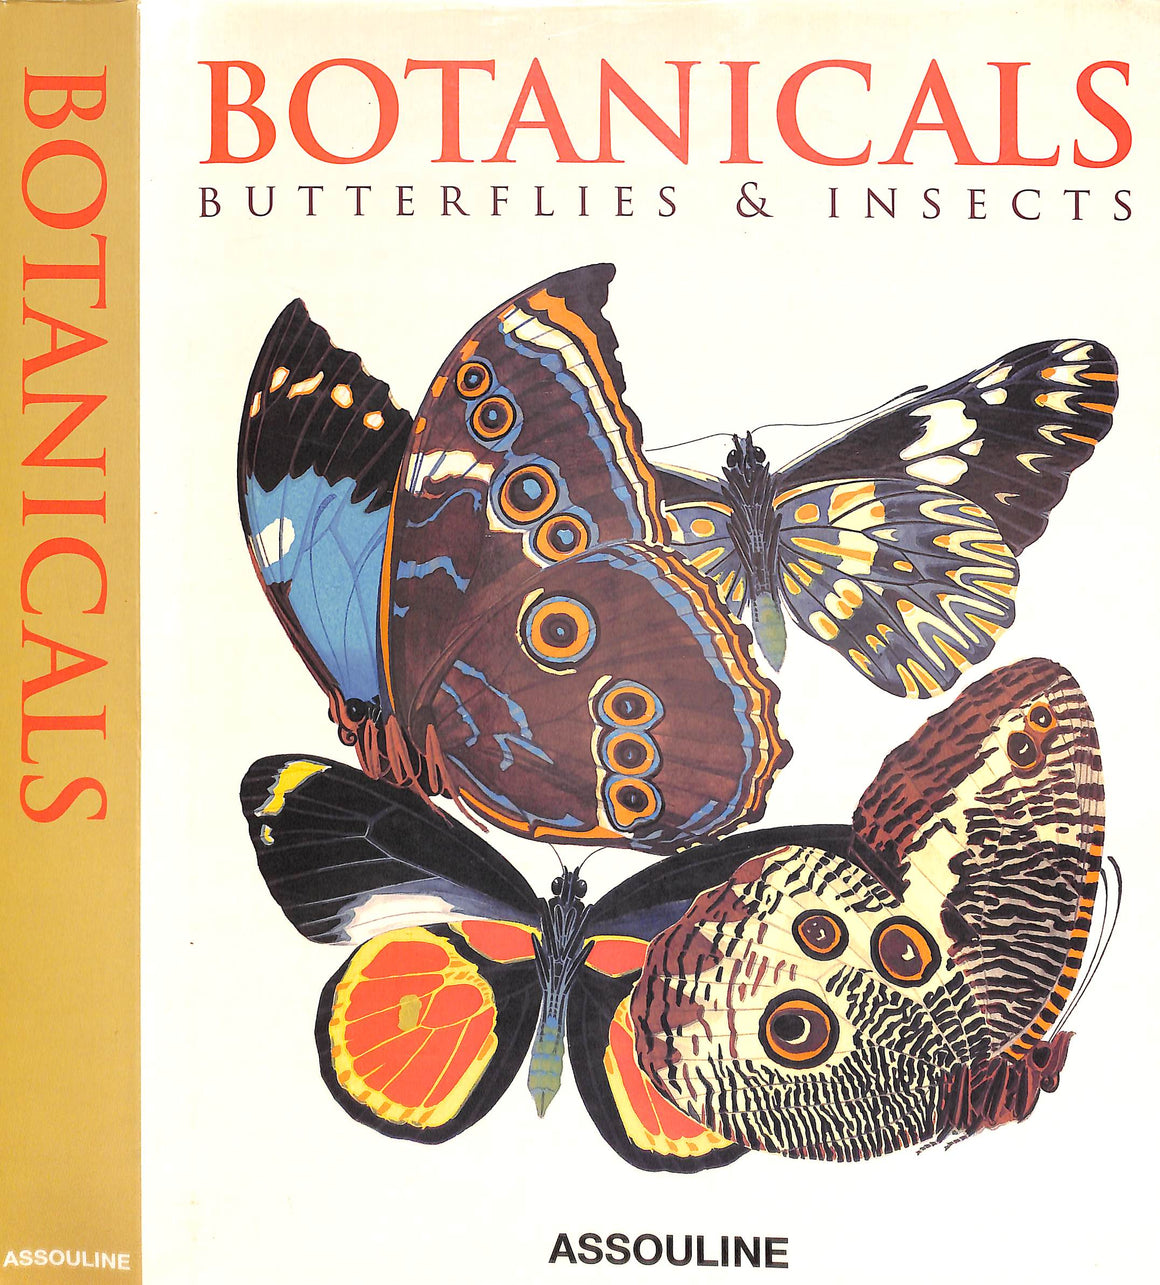 "Botanicals: Butterflies & Insects" 2008 OVERSTREET, Leslie K.